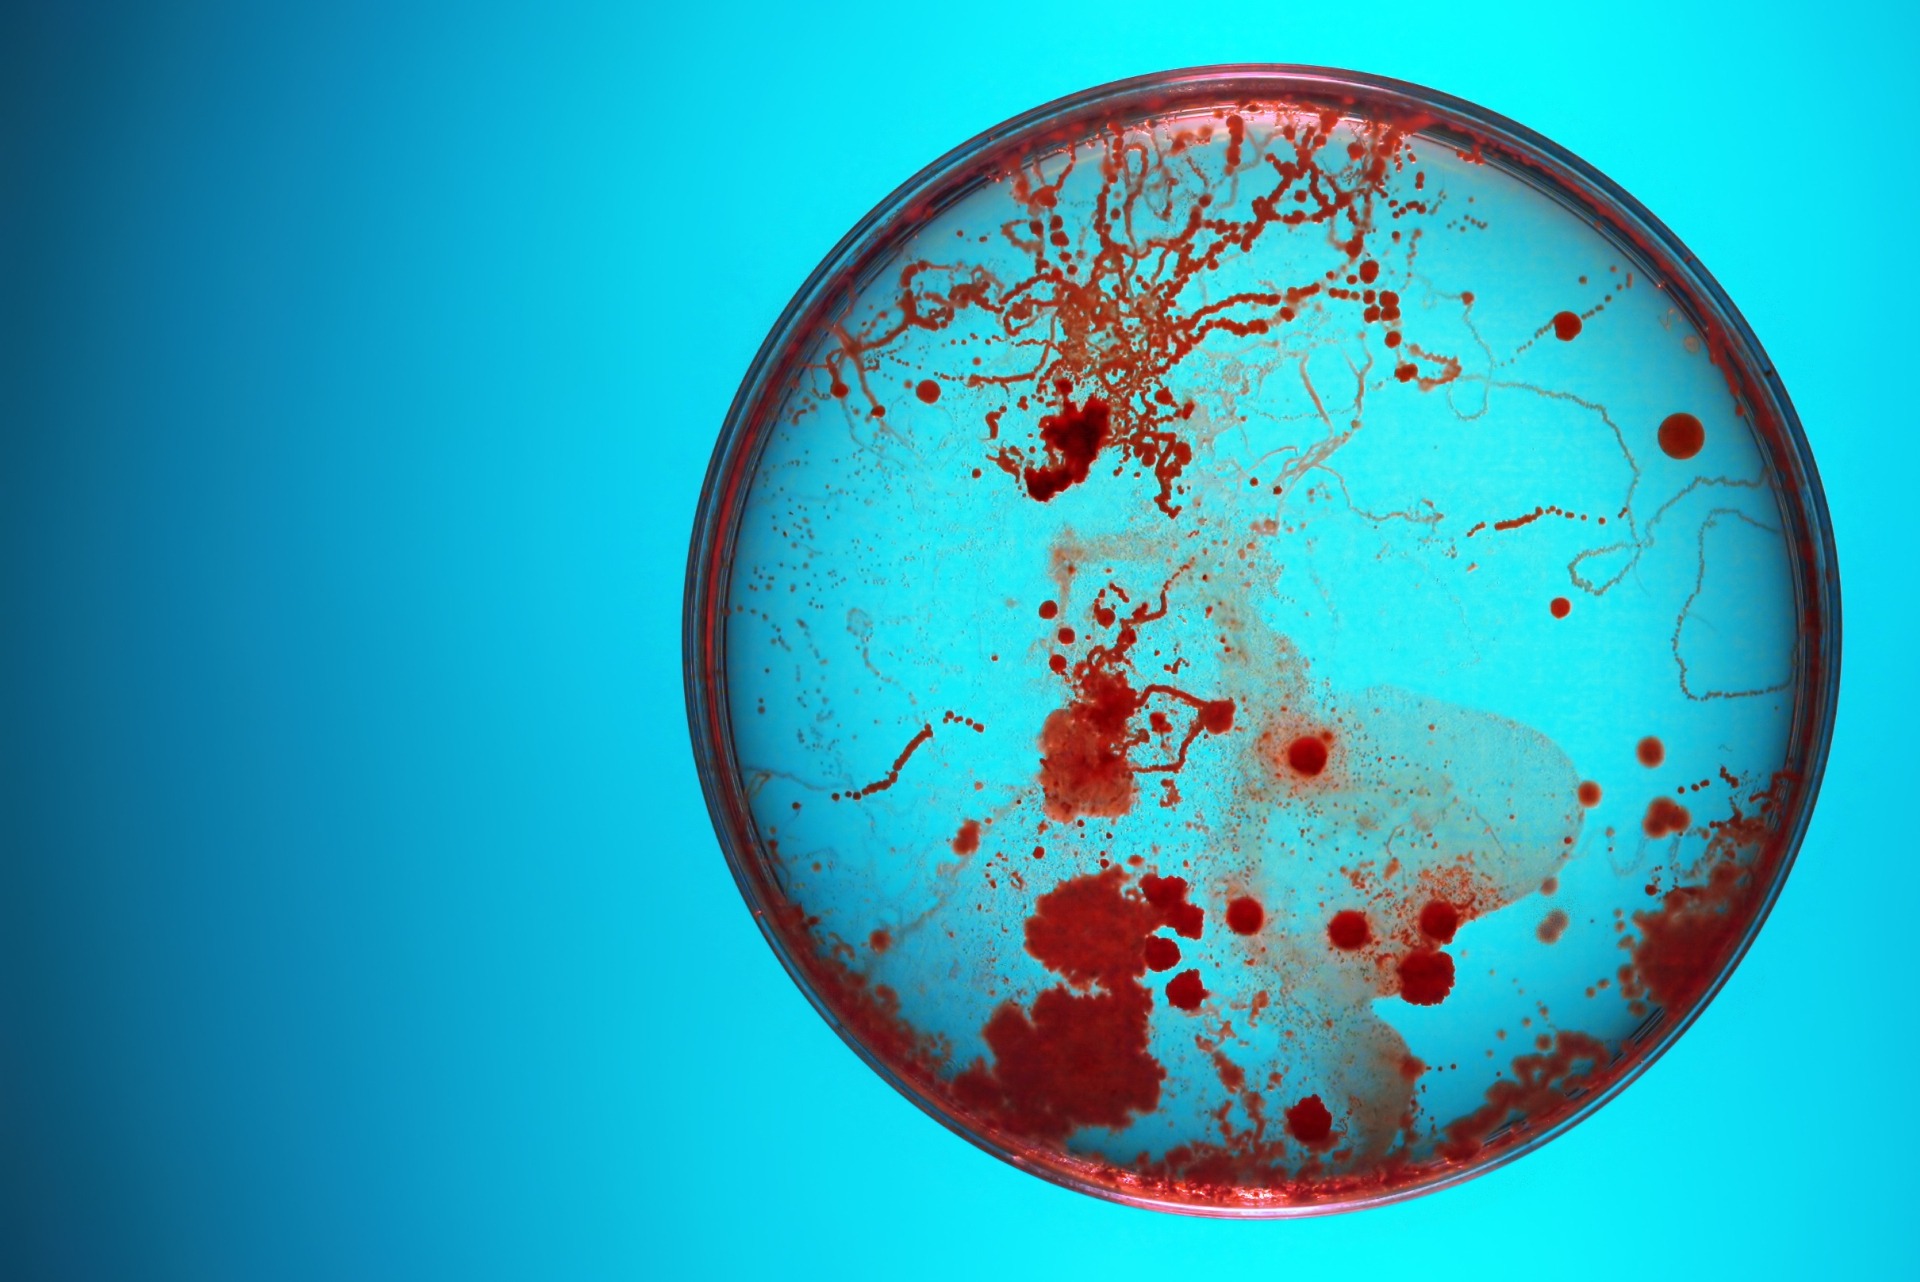 Biological Samples in Round Petri Dish